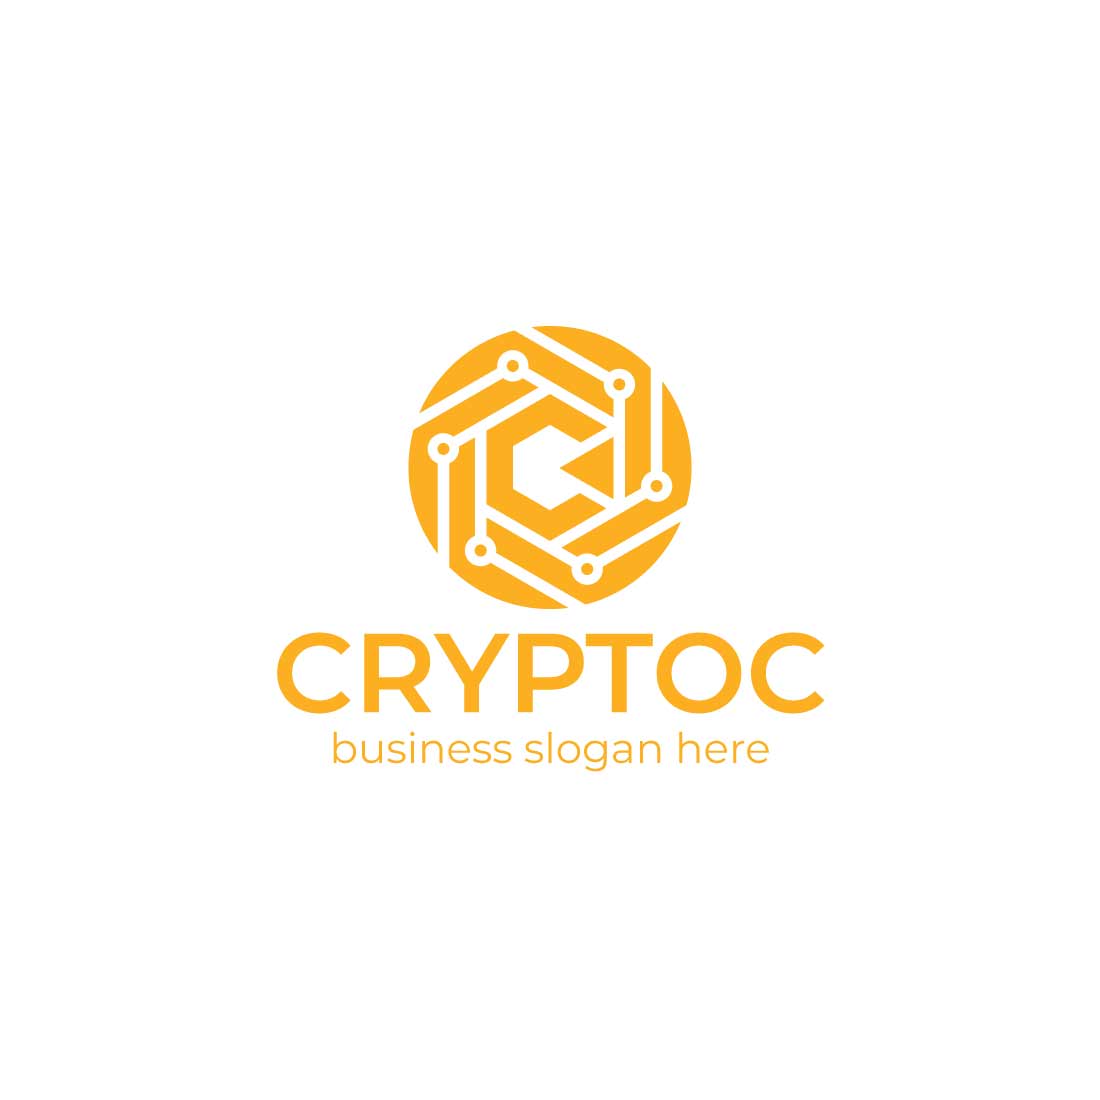 Letter C crypto coin logo design preview image.